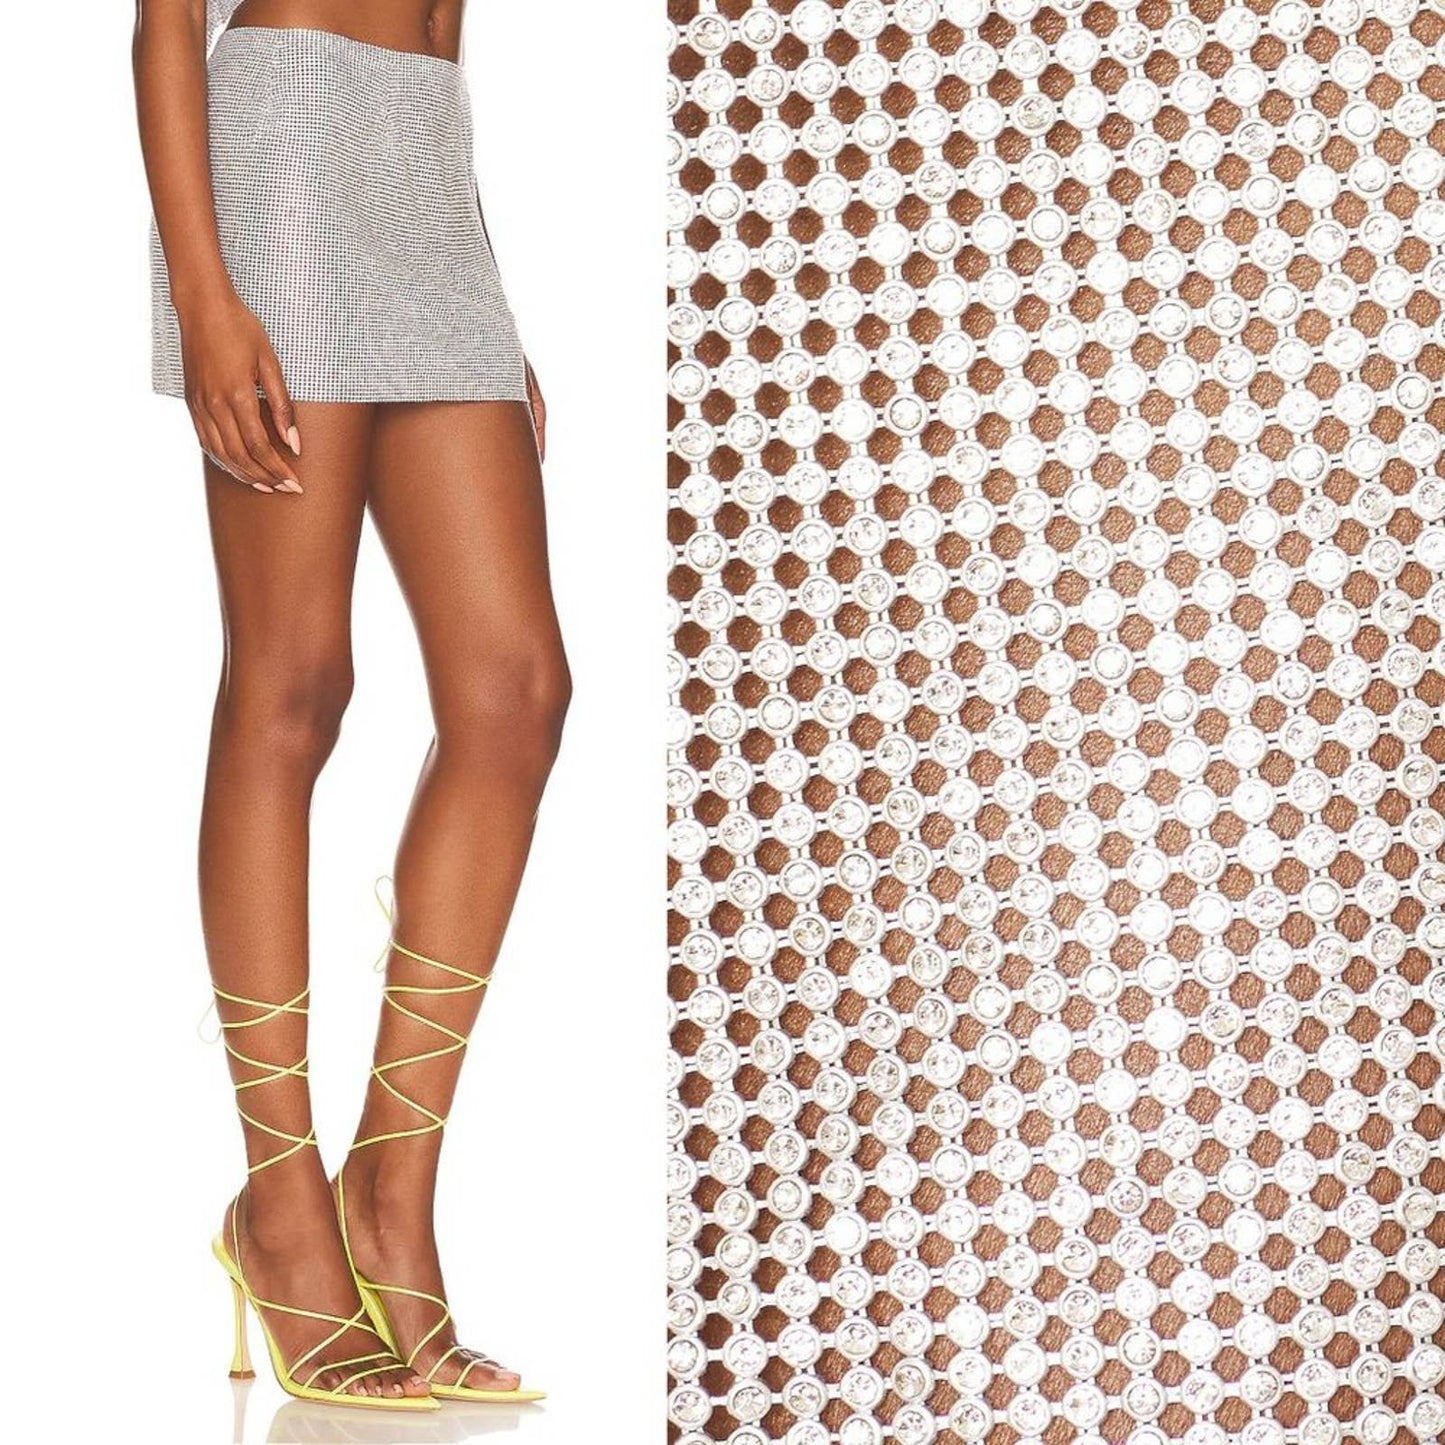 Camila Coelho Noemi Skirt in Silver Rhinestone NWT Size XS / Small